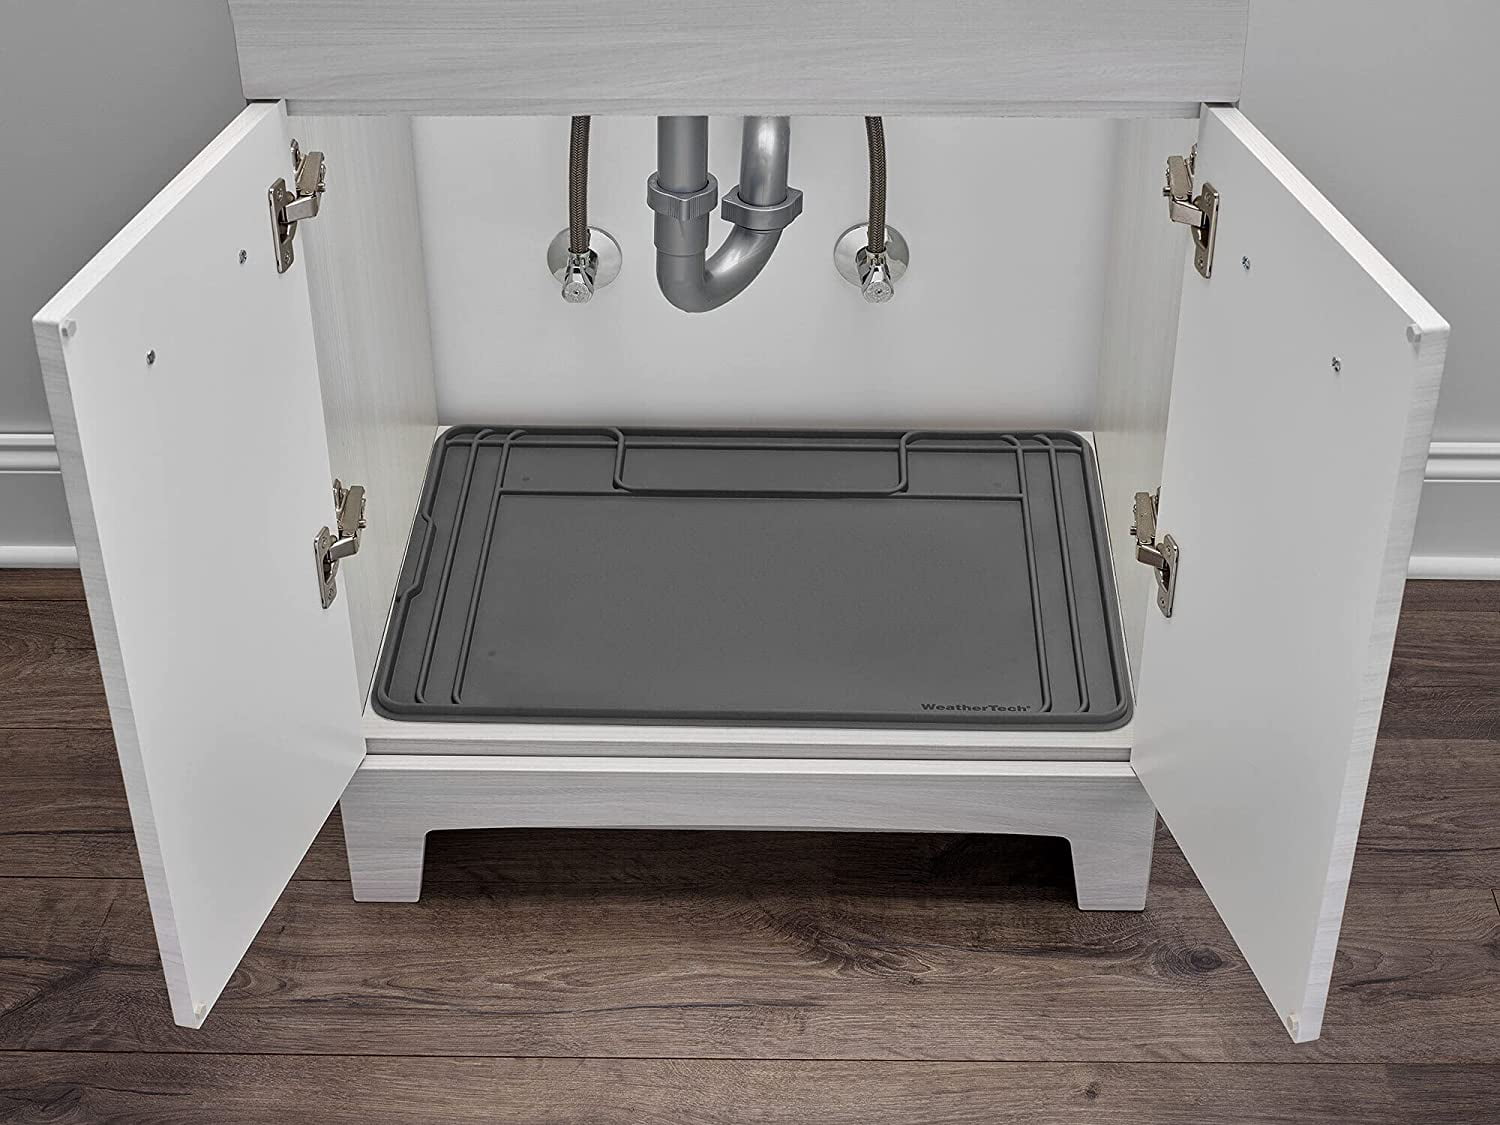 WeatherTech SinkMat Waterproof Under Kitchen Sink Cabinet Protection Mat  Black USM01BK or Tan USM01TN - Made in the USA